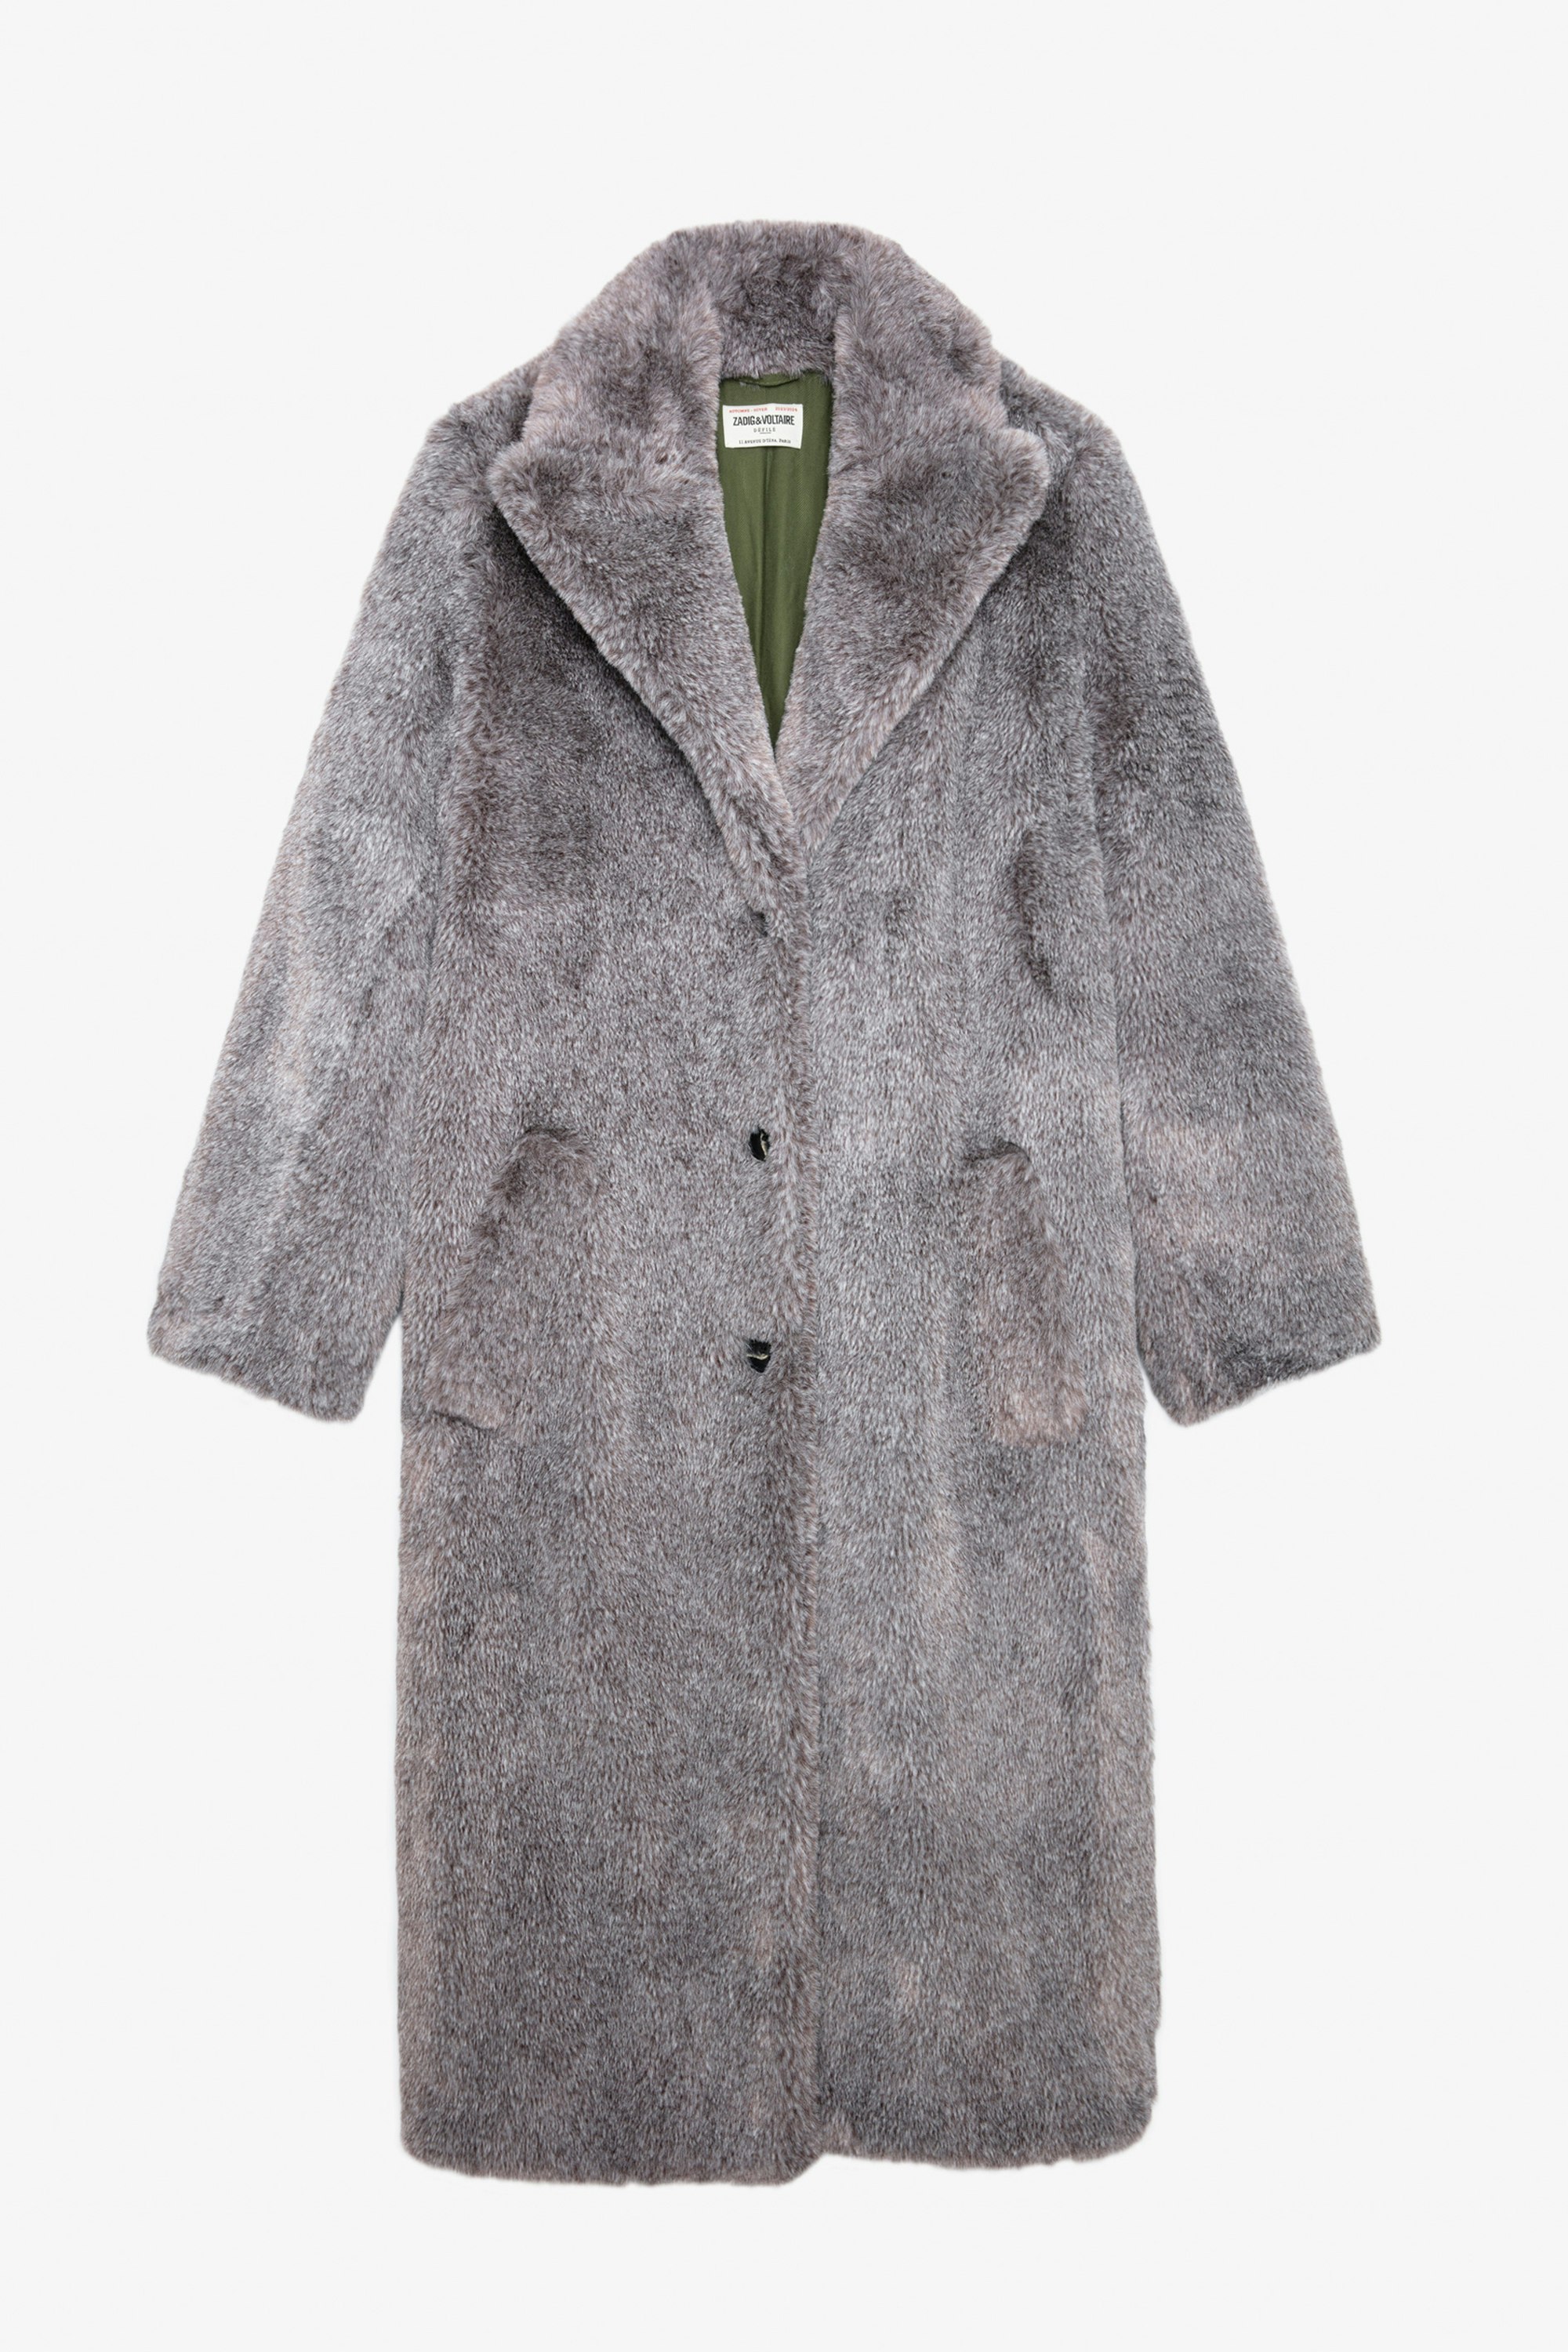 Monacoco Coat - Women’s long brown faux fur coat.